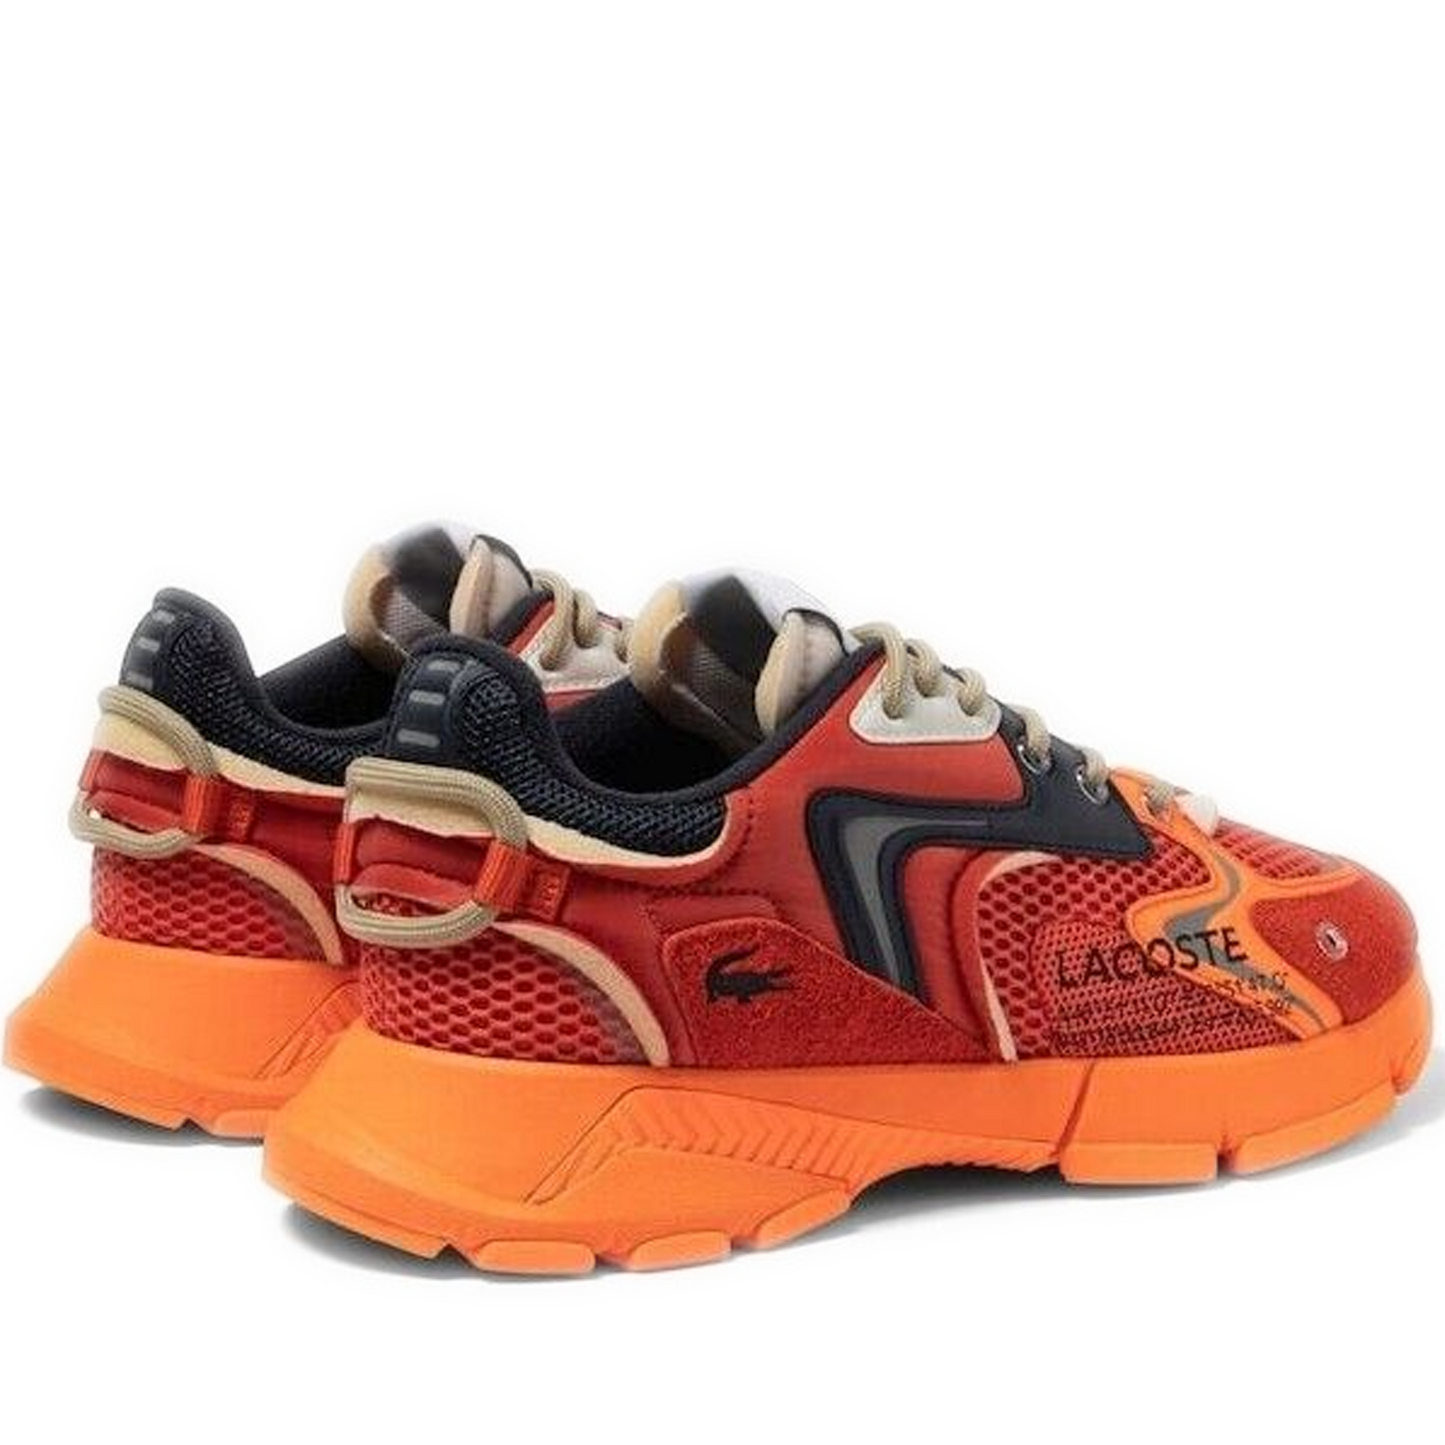 Men's Lacoste L003 Neo Sneakers - Red/ Orange